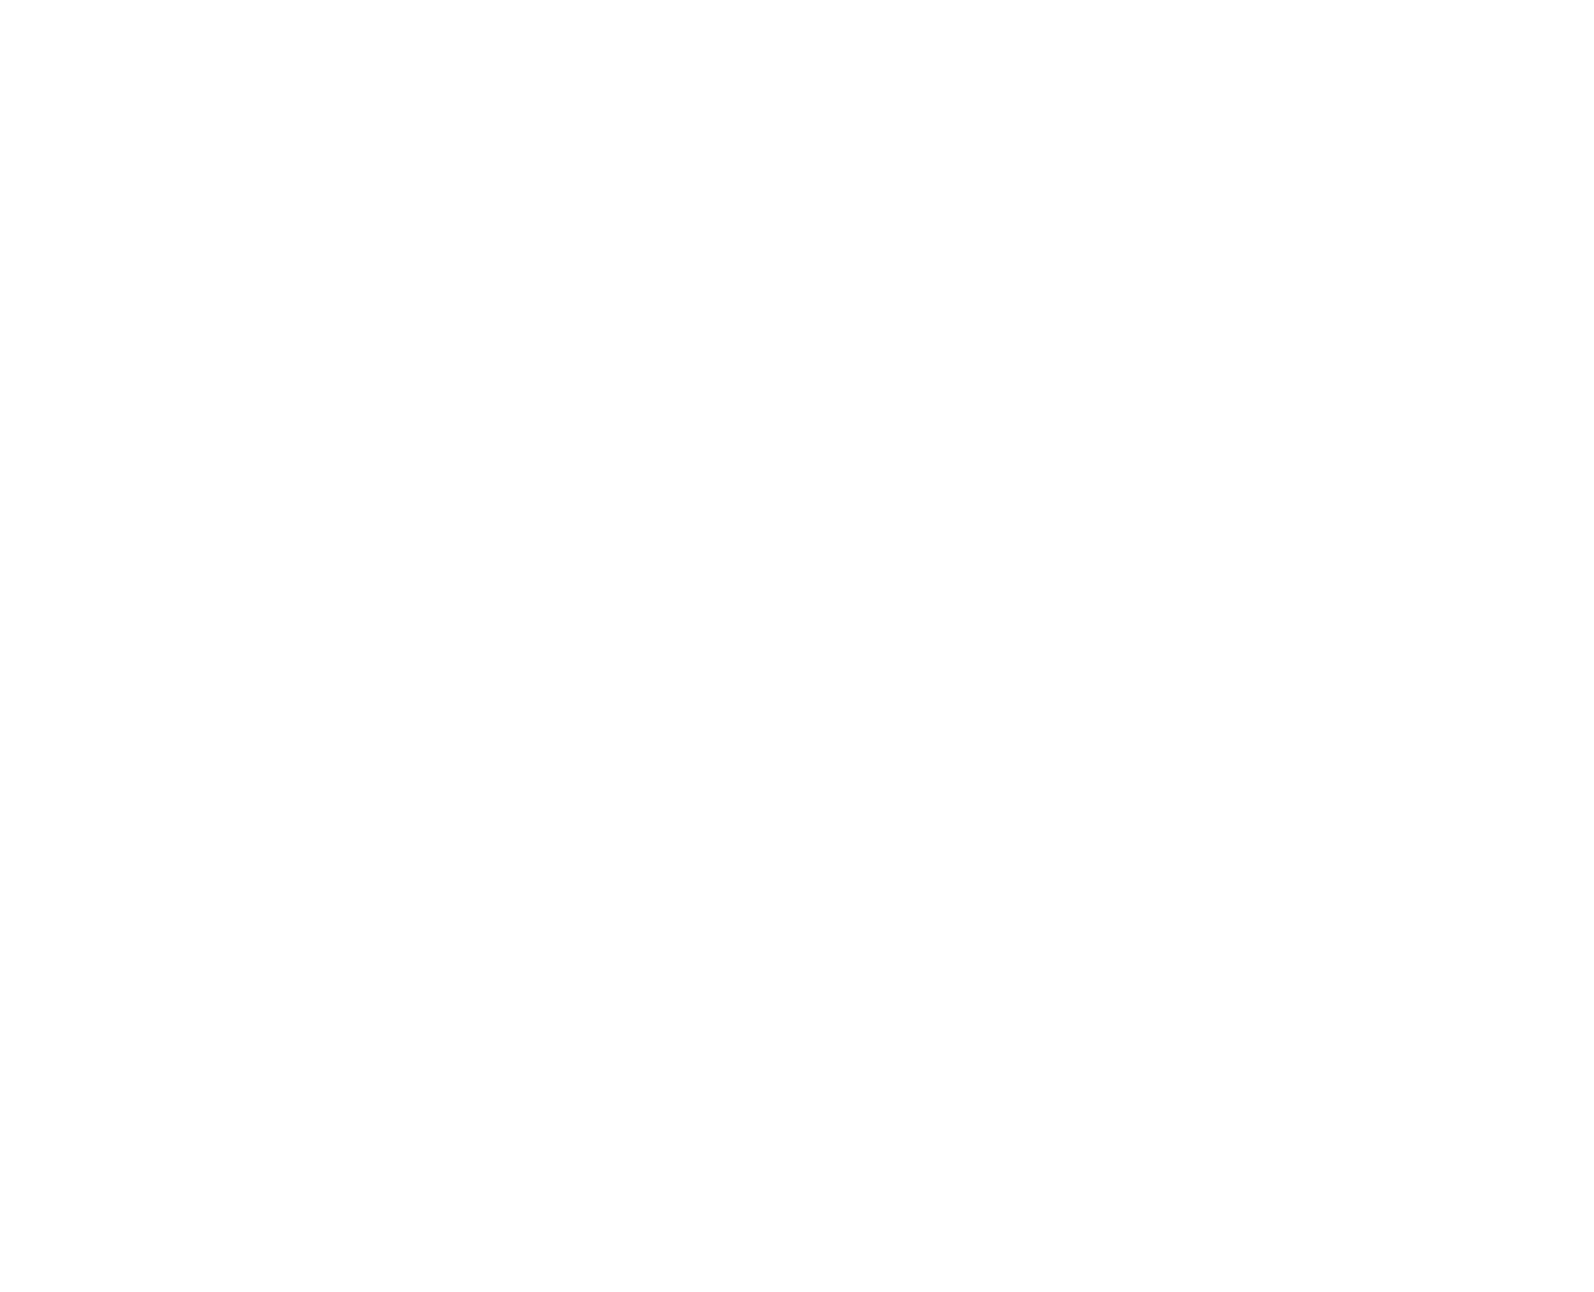 Weibo logo for dark backgrounds (transparent PNG)